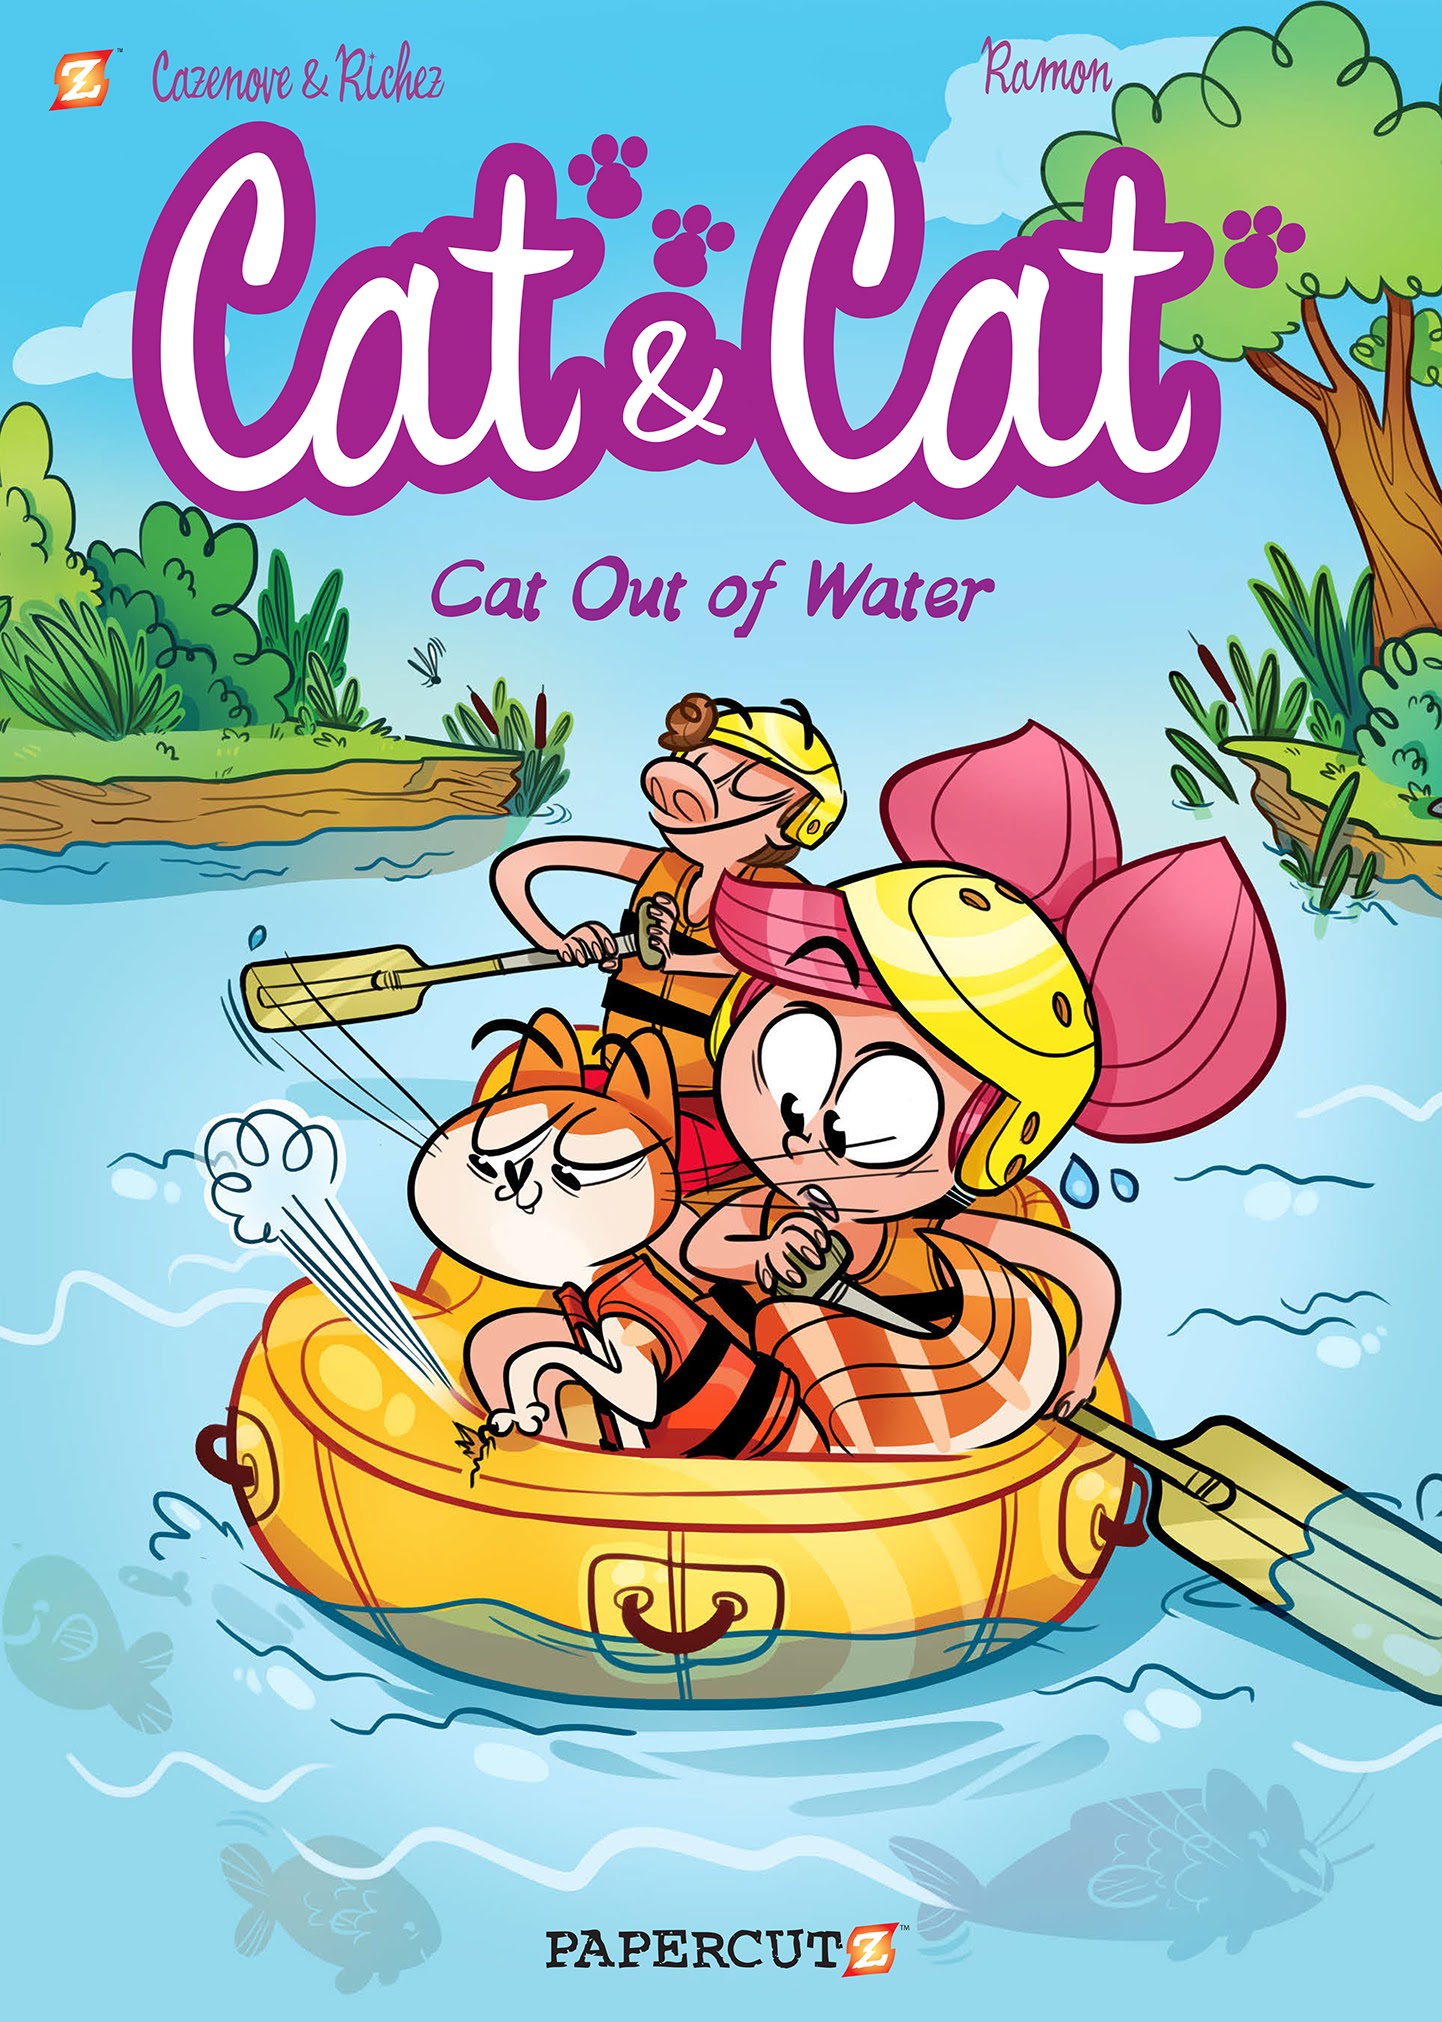 Read online Cat & Cat comic -  Issue # TPB 2 - 1